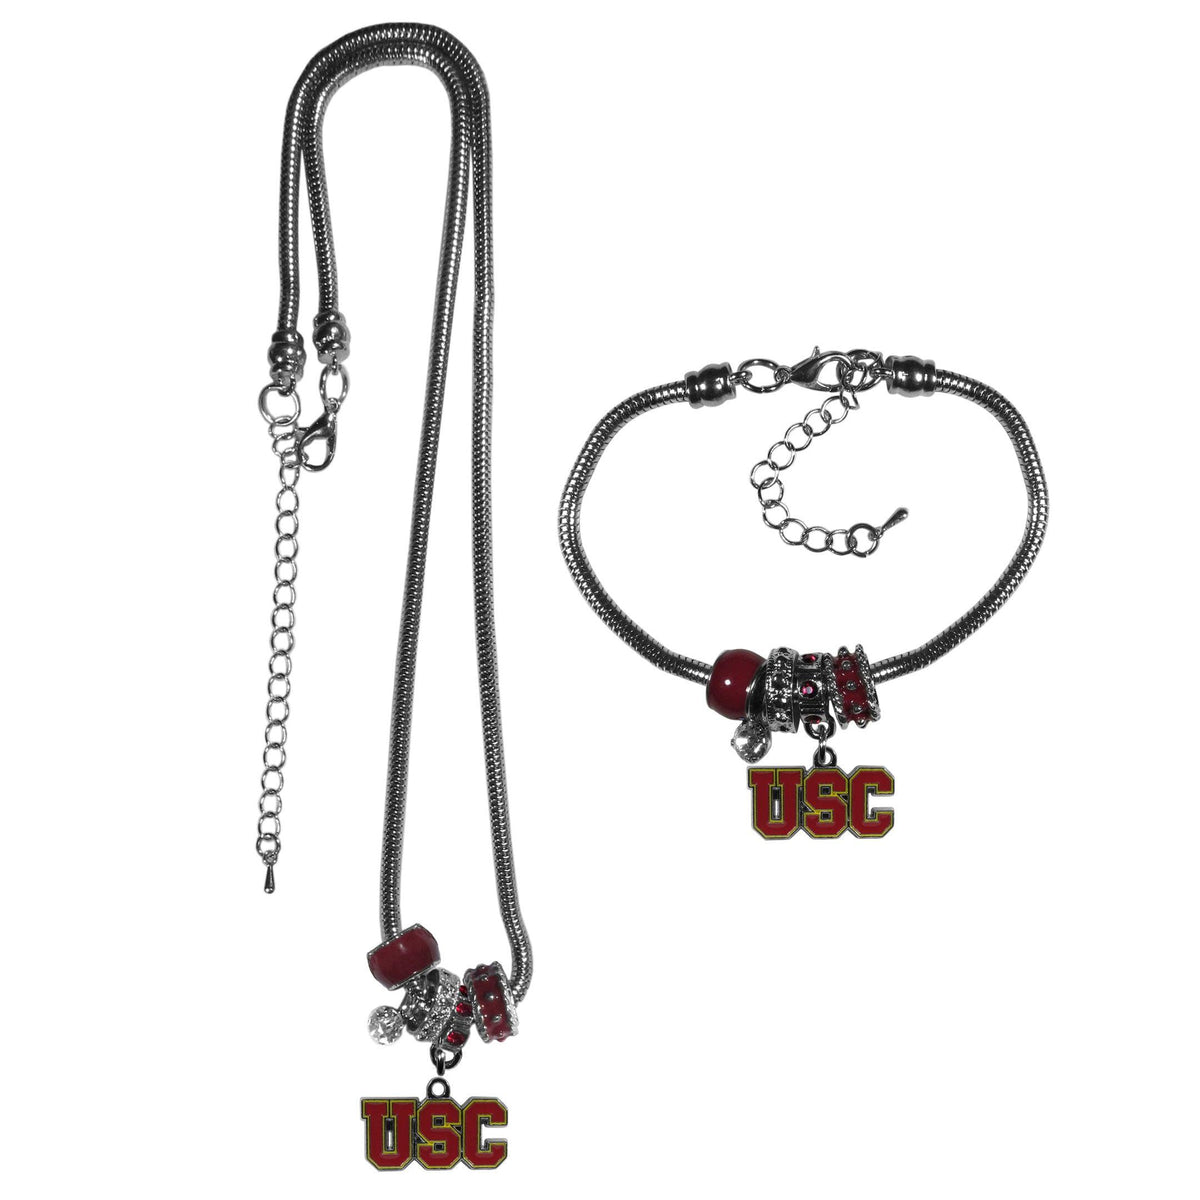 USC Trojans Euro Bead Necklace and Bracelet Set - Flyclothing LLC